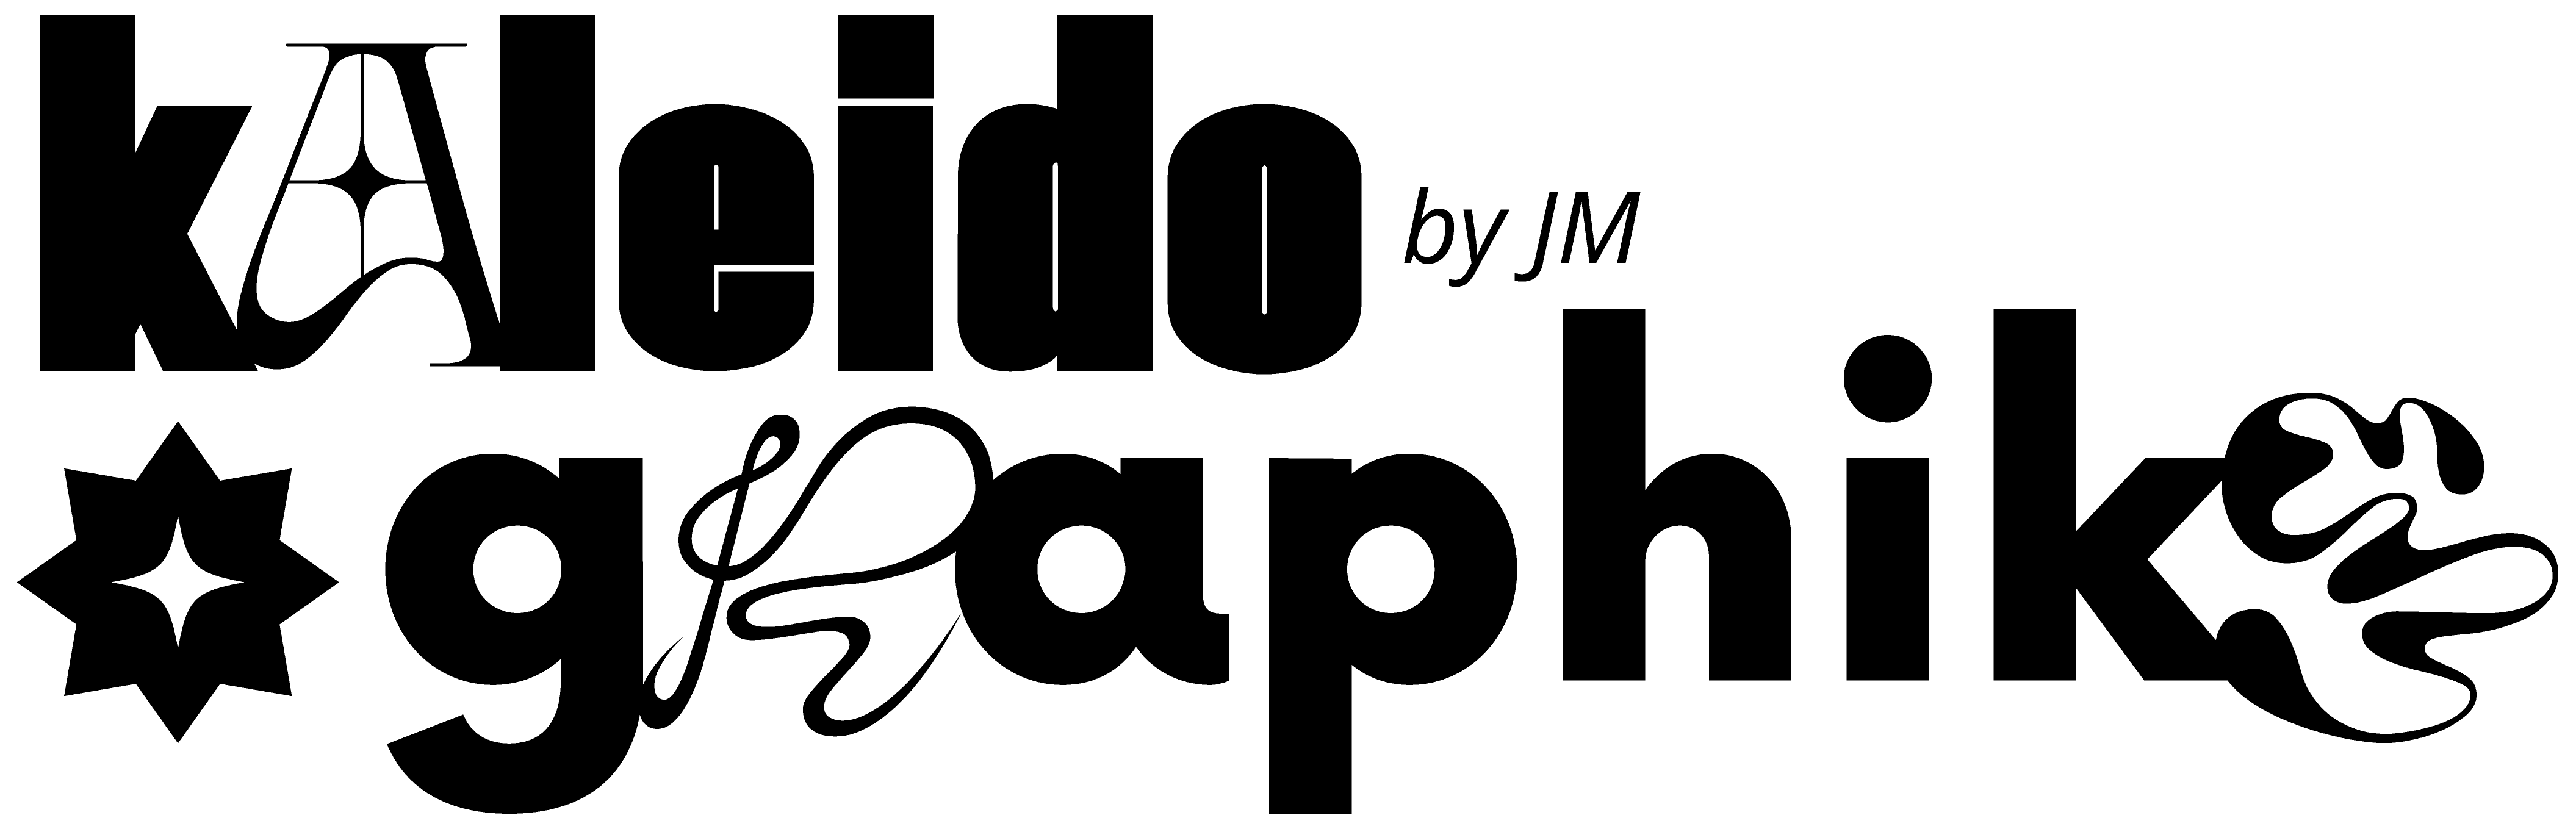 kaleidographiks logo principal